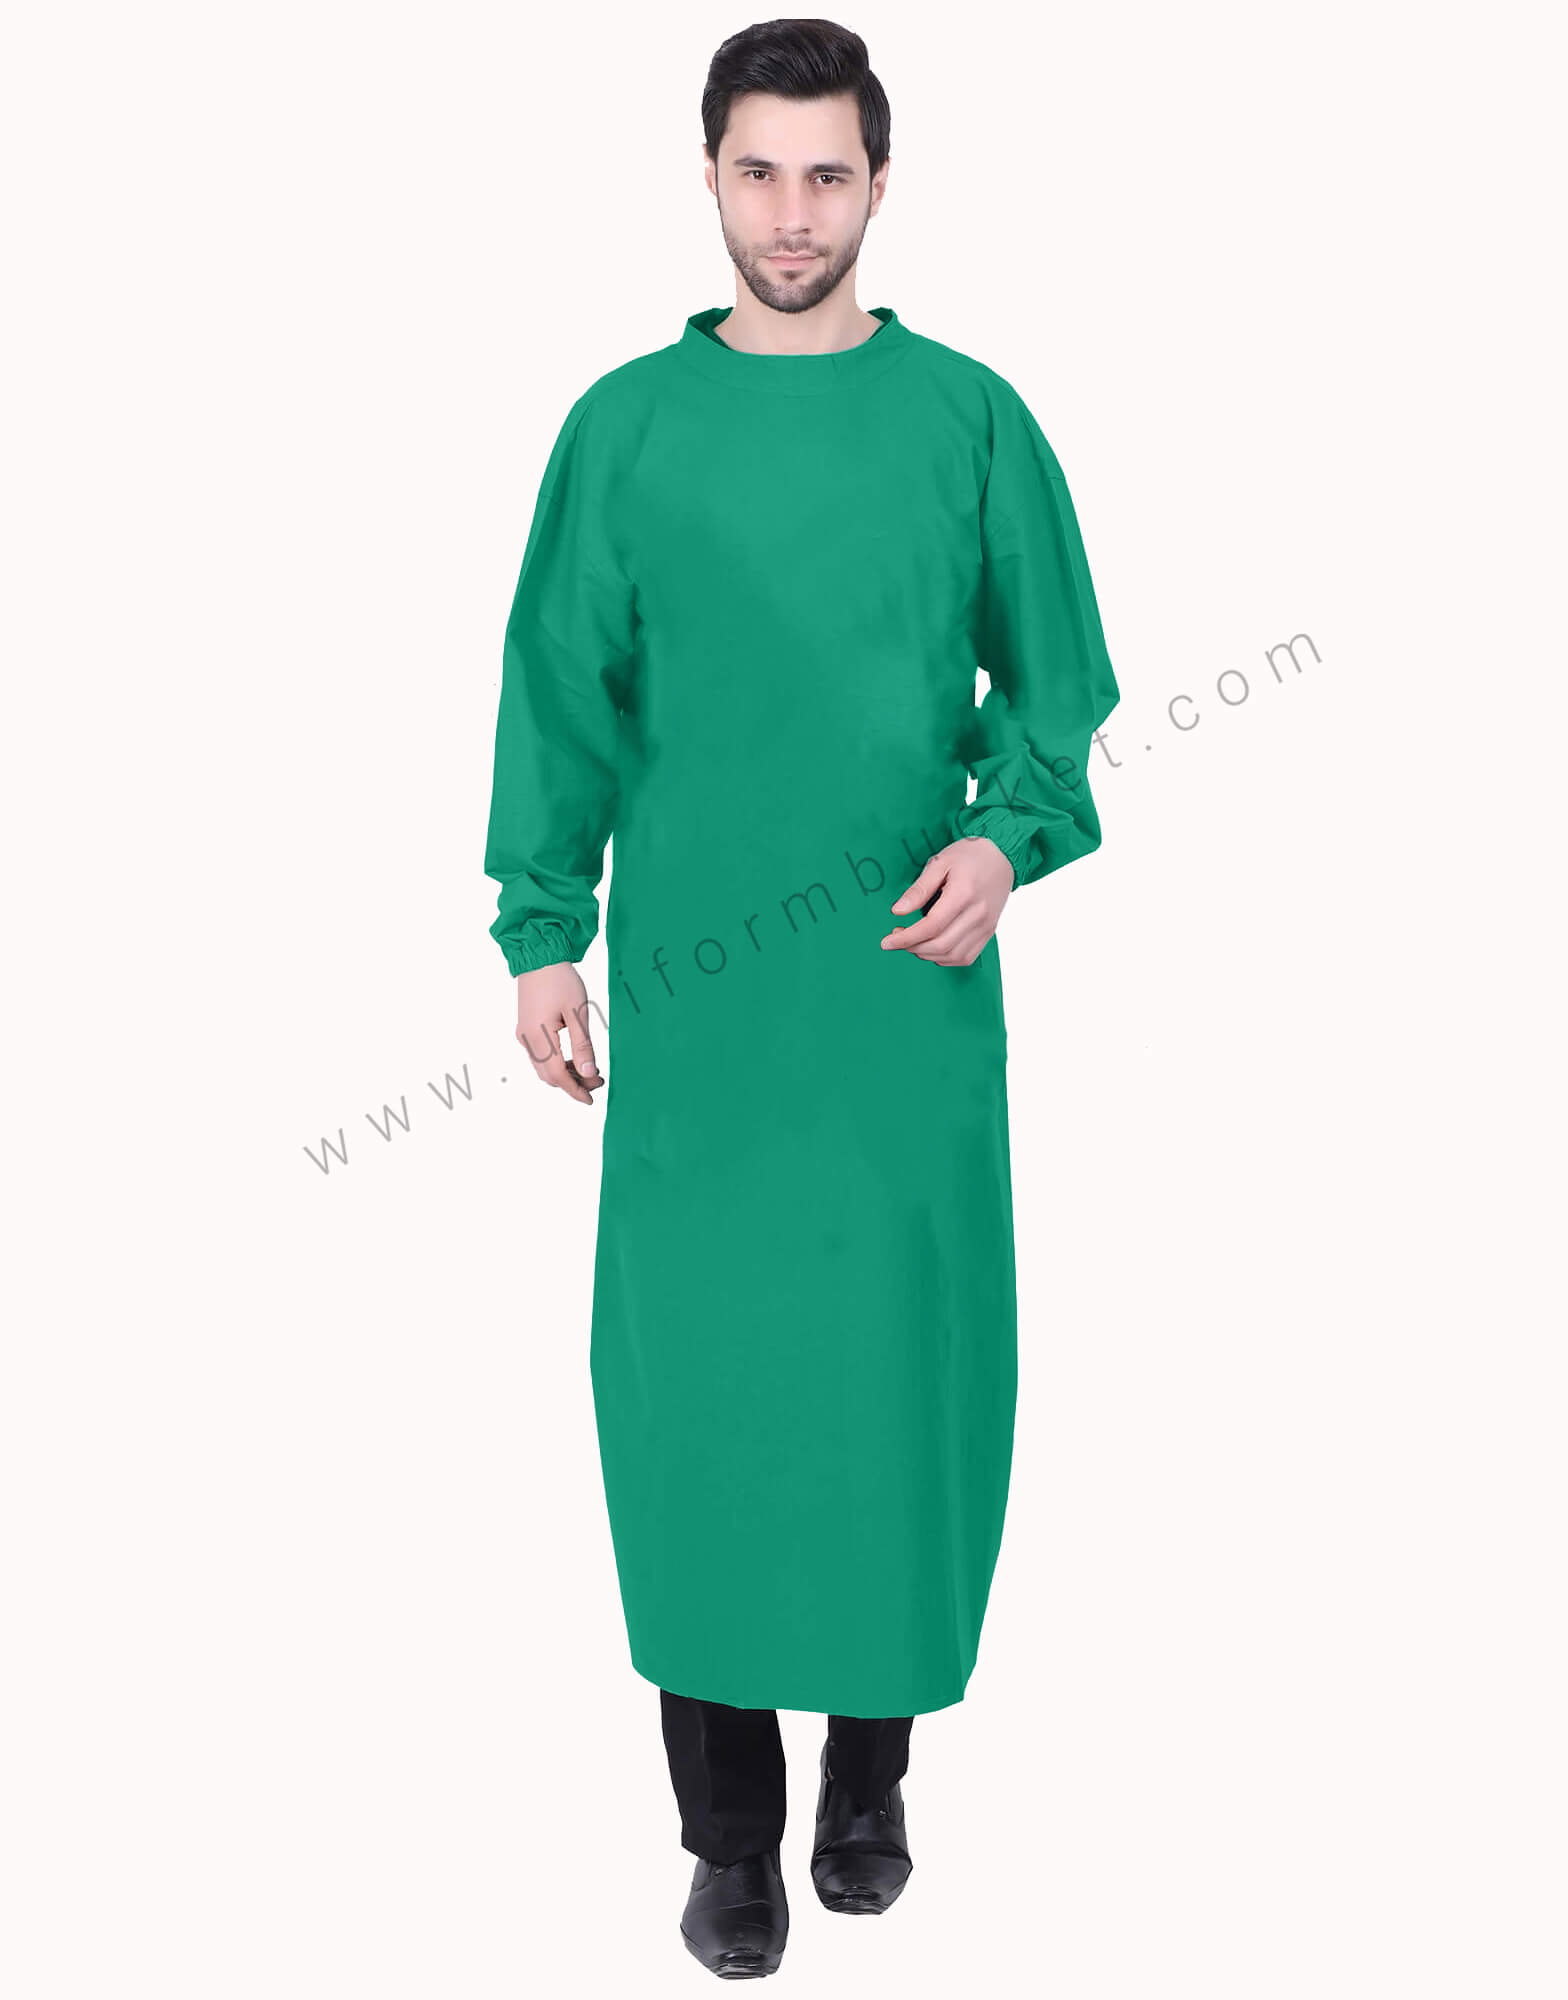 Green OT Dress/Scrubs (UNISEX) | Prithvi Medical Book Store